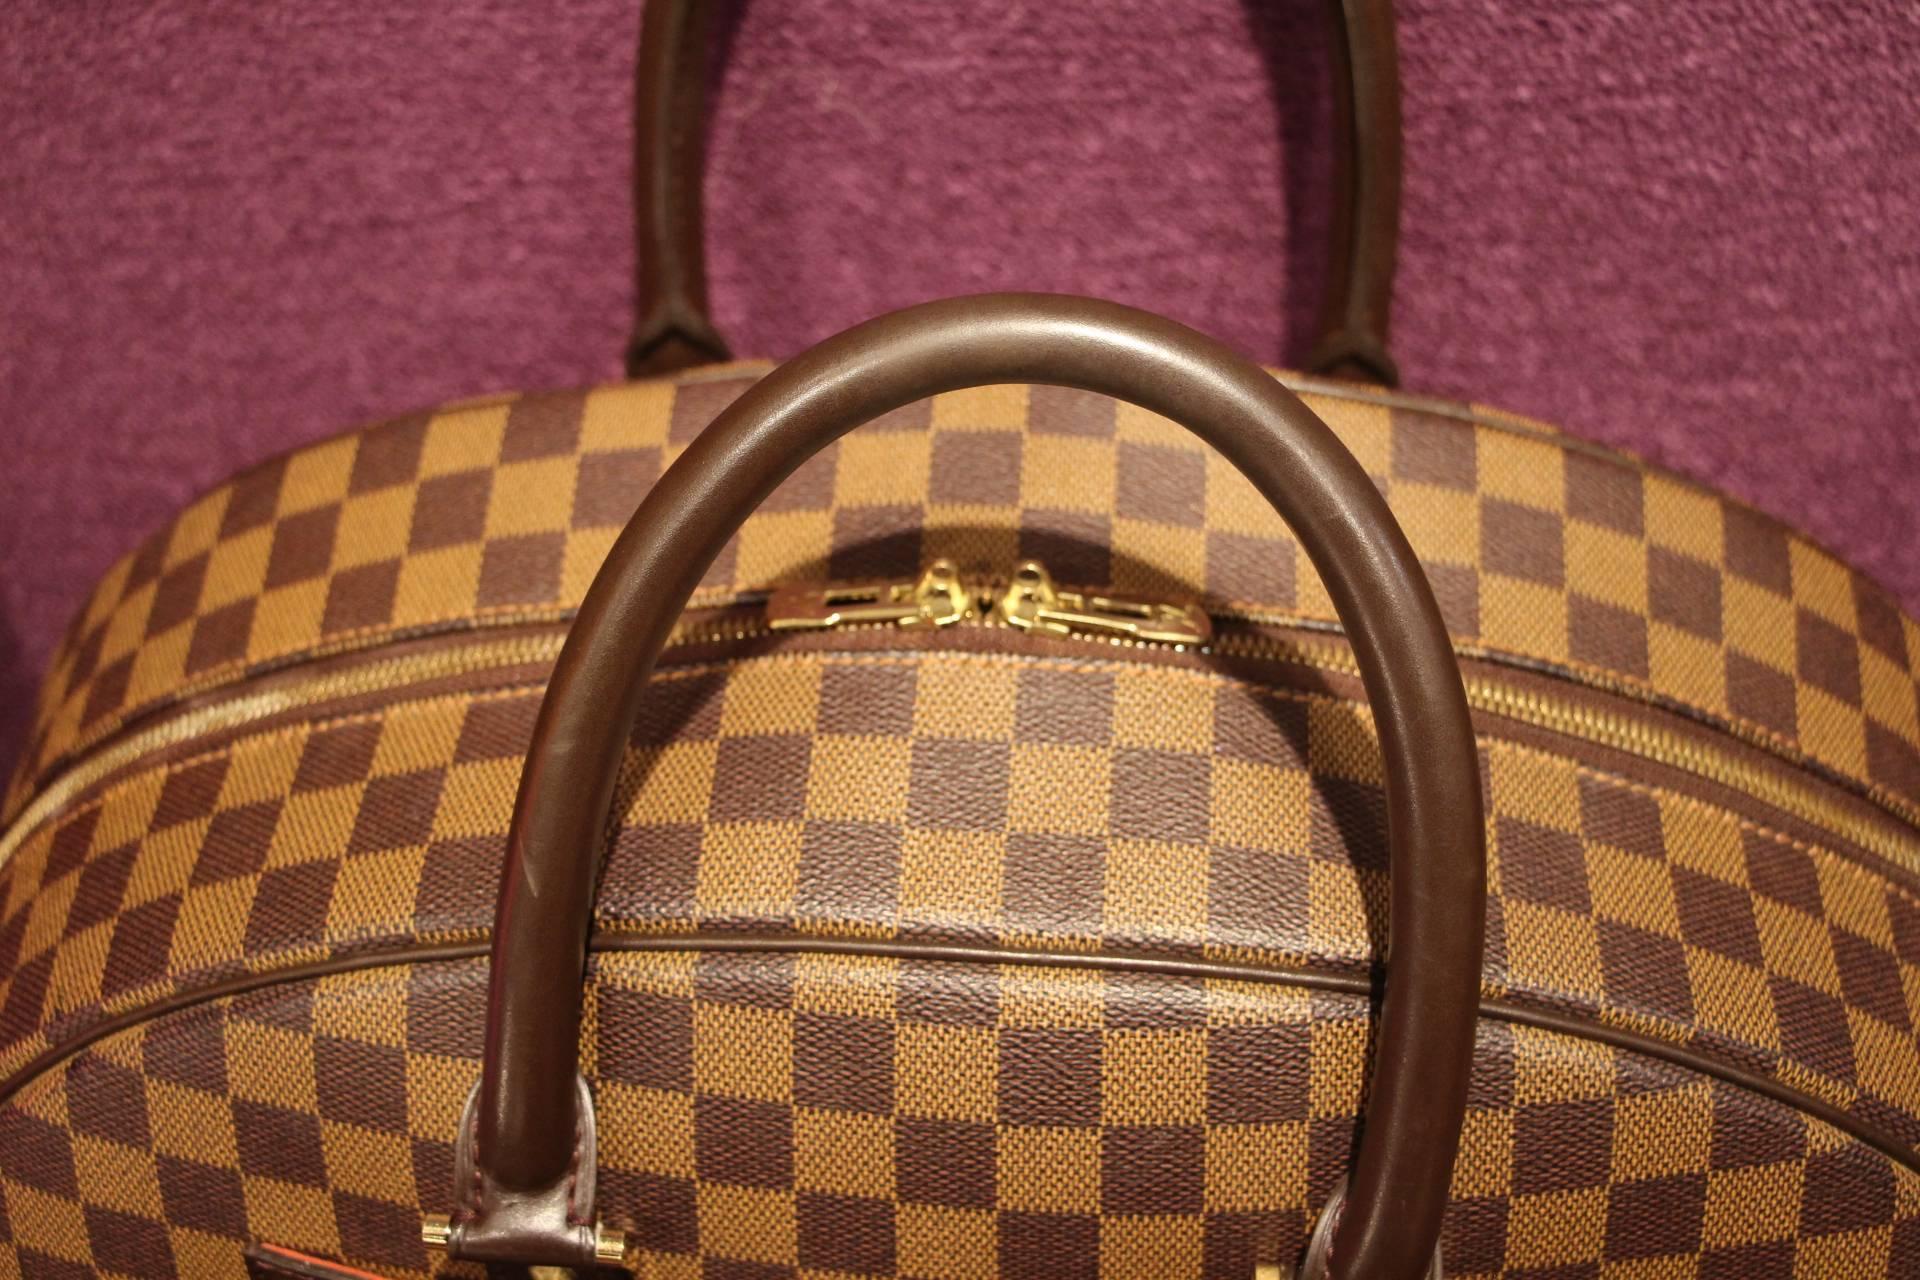 European Oversized Collector's Louis Vuitton Travel Bag, Damier Pattern